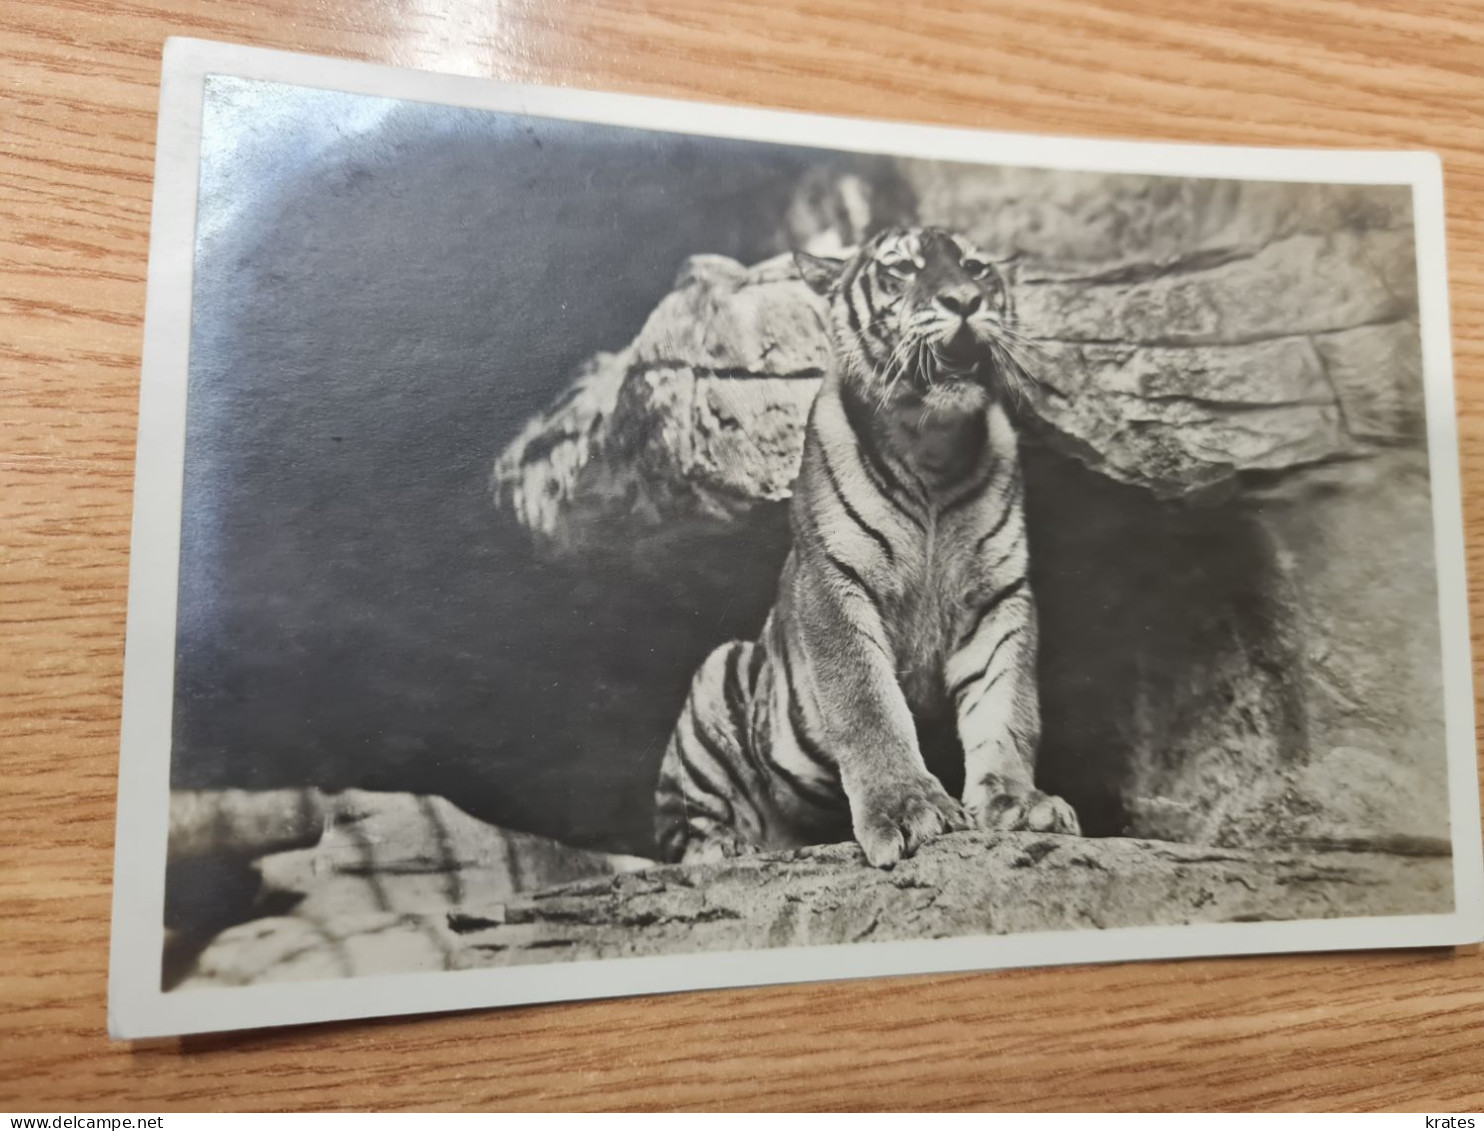 Postcard - Tigers   (32708) - Tijgers